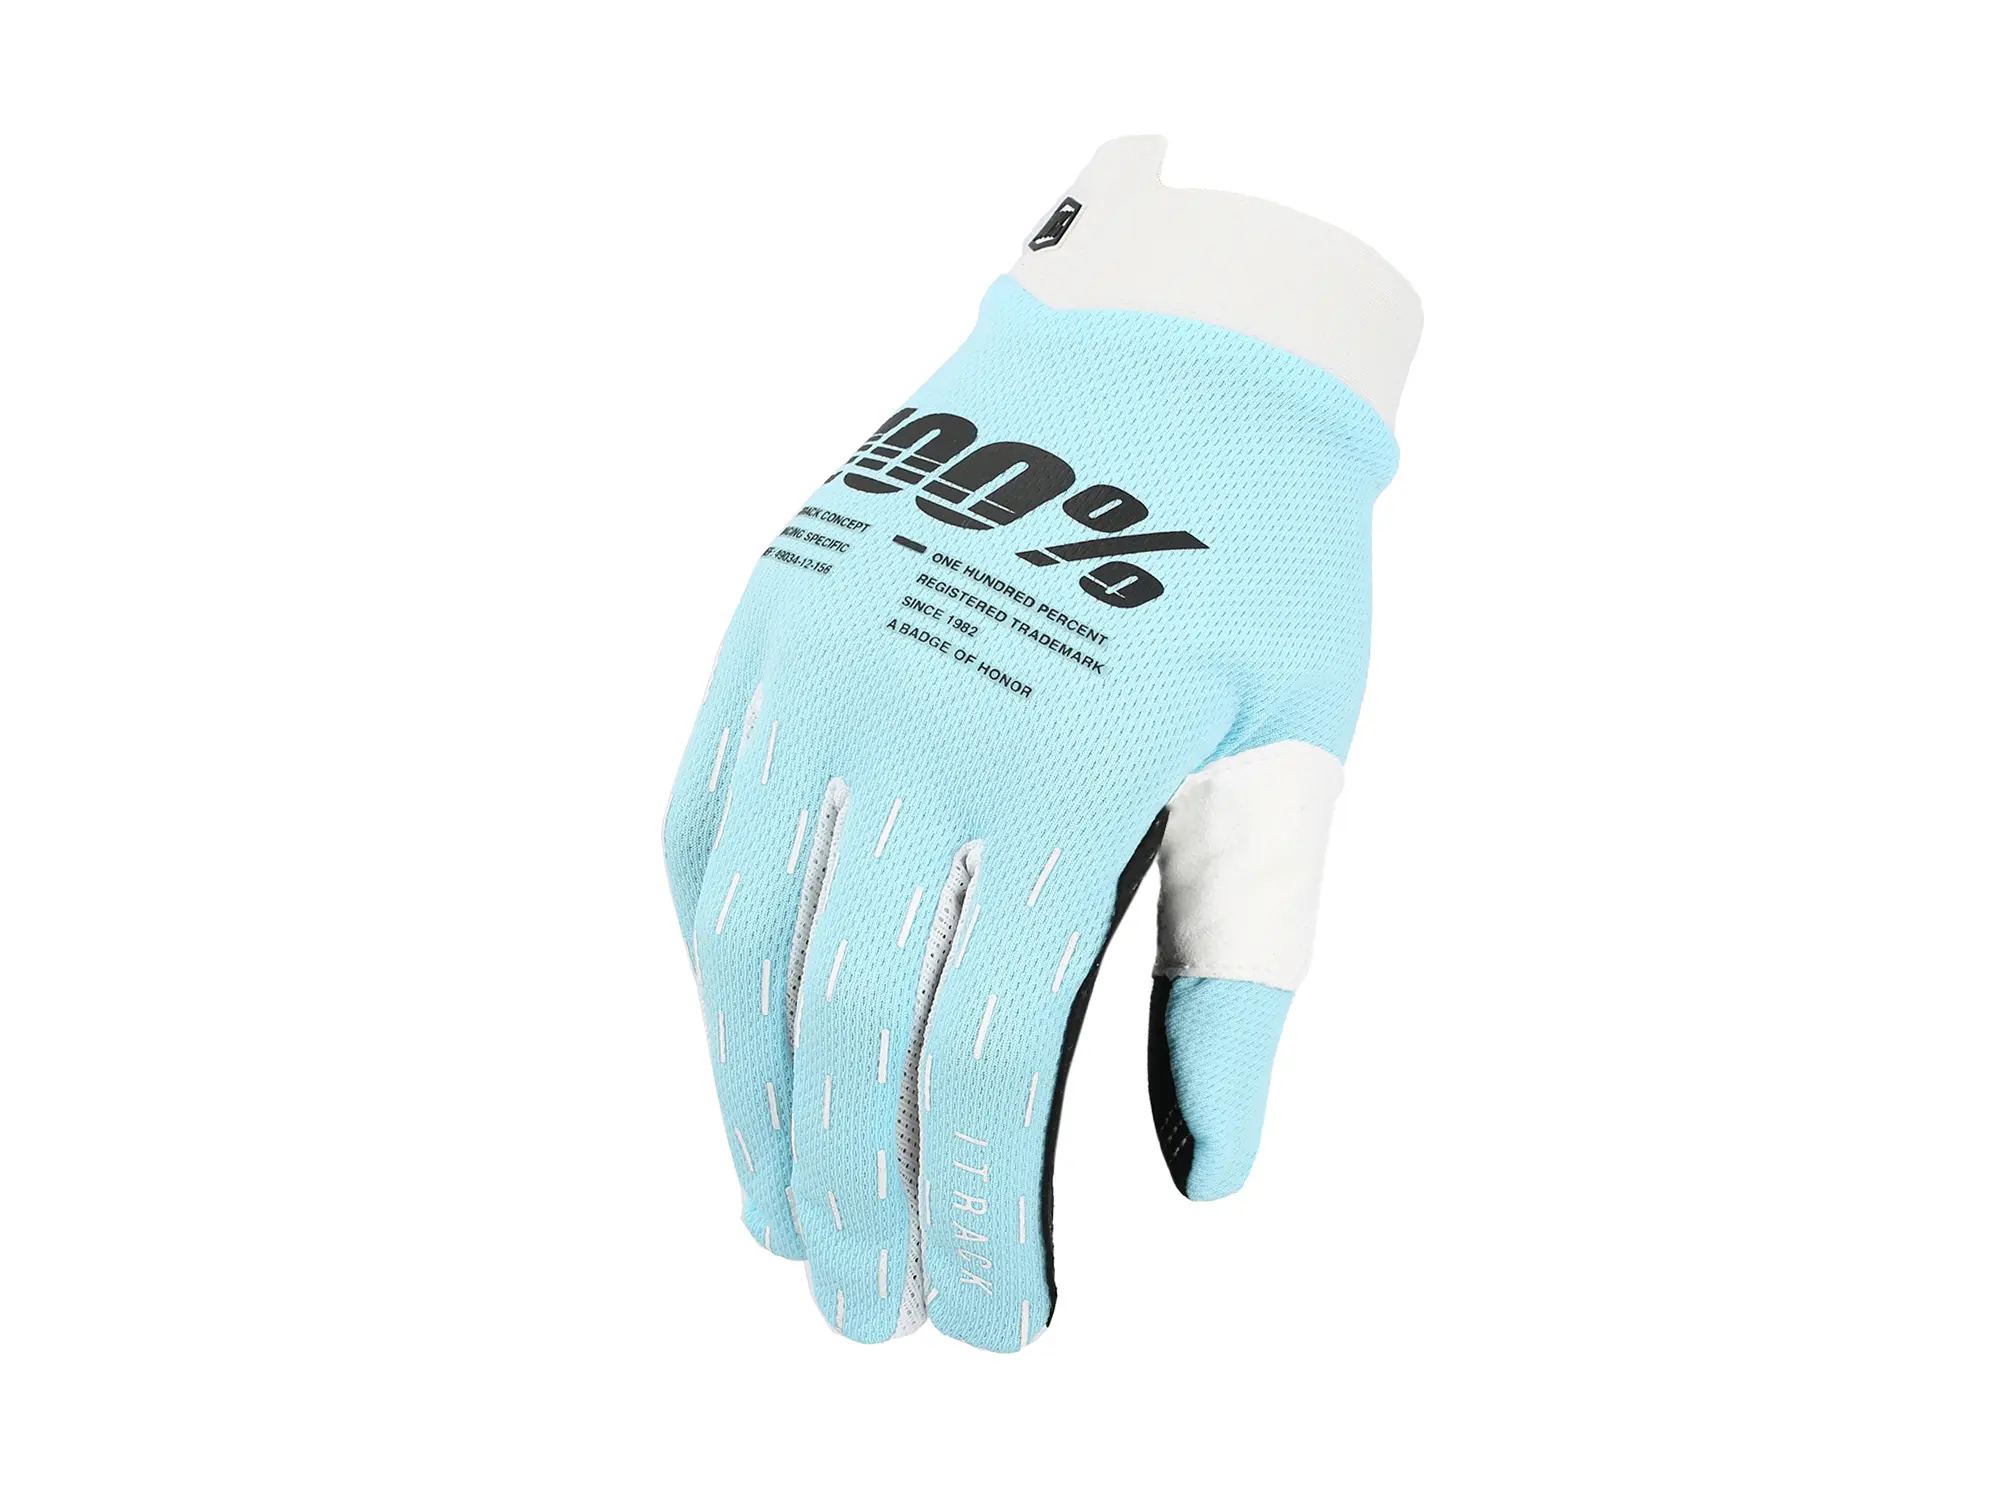 Glove iTrack - Aqua, Item no: 10071993 - Image 1